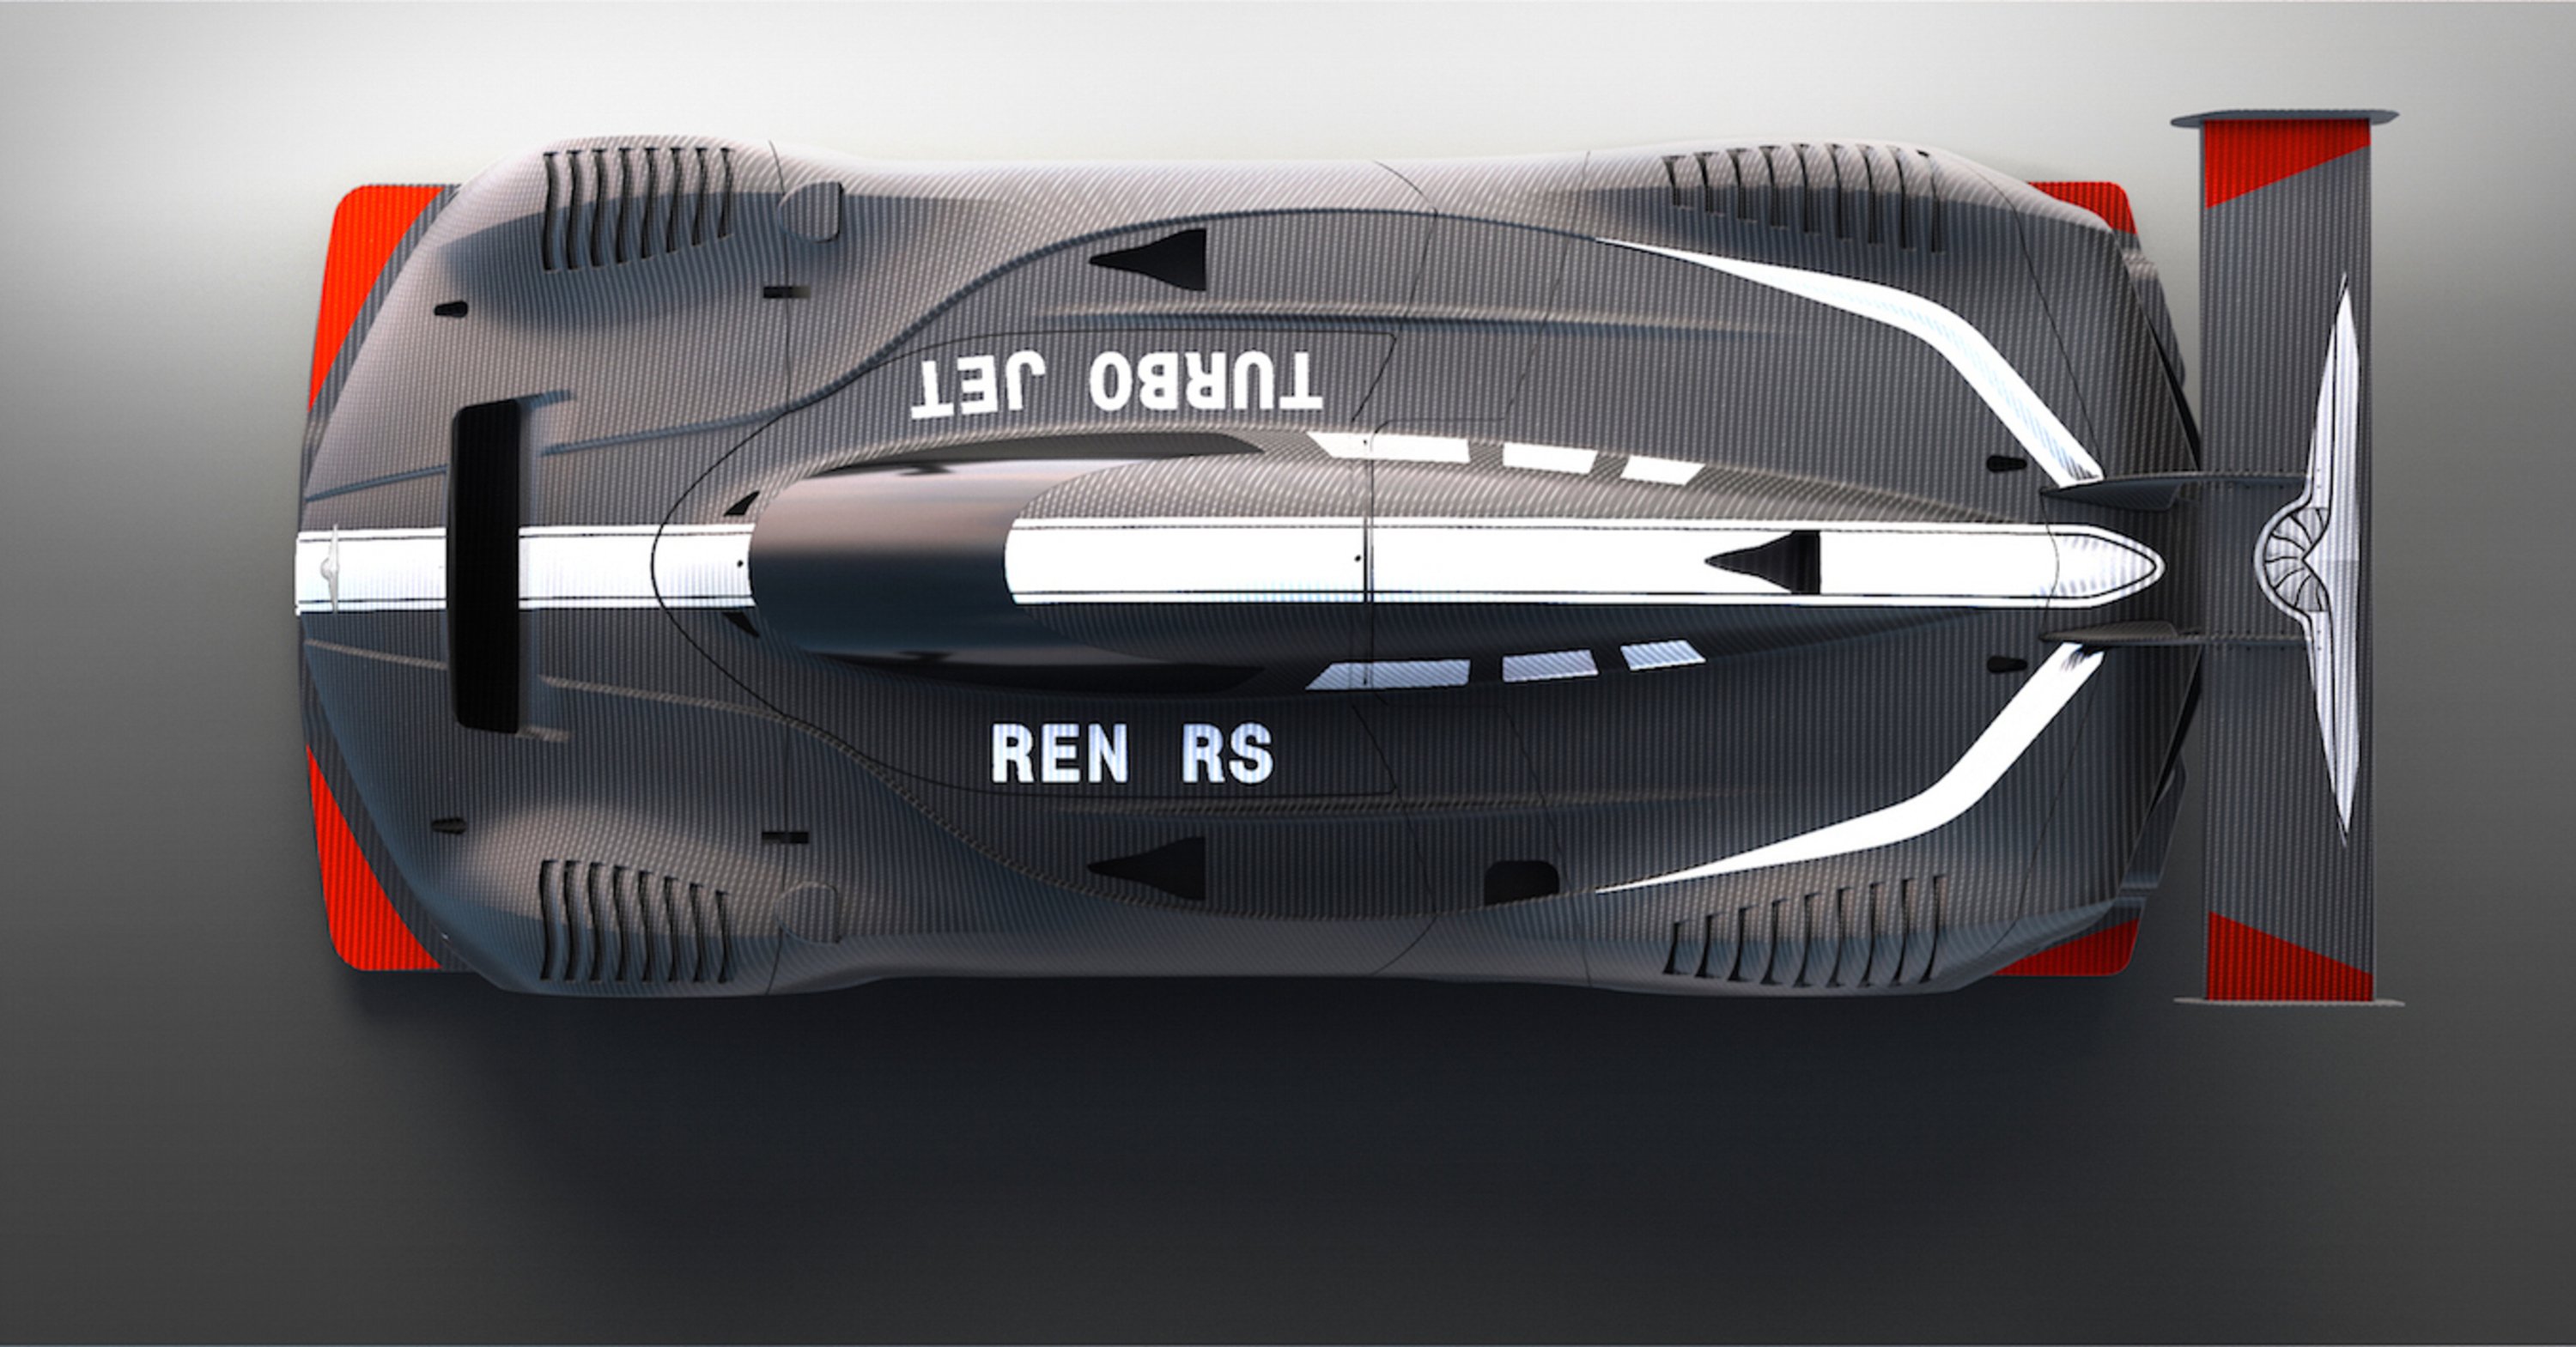 Salone di Ginevra 2018: anteprima per la supercar Ren RS